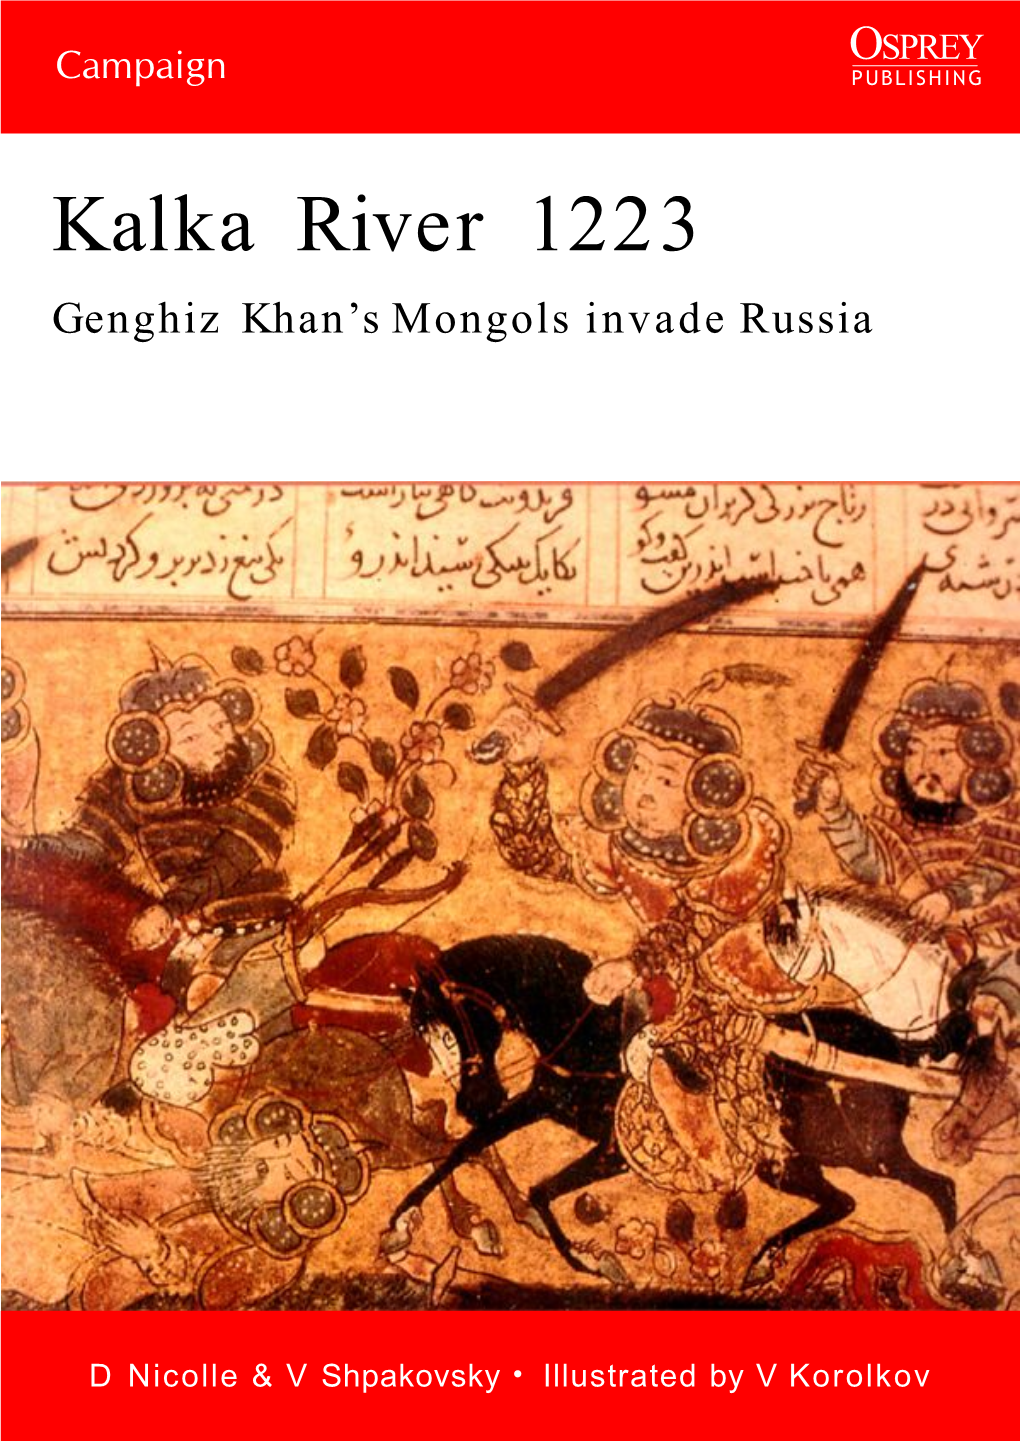 Kalka River 1223